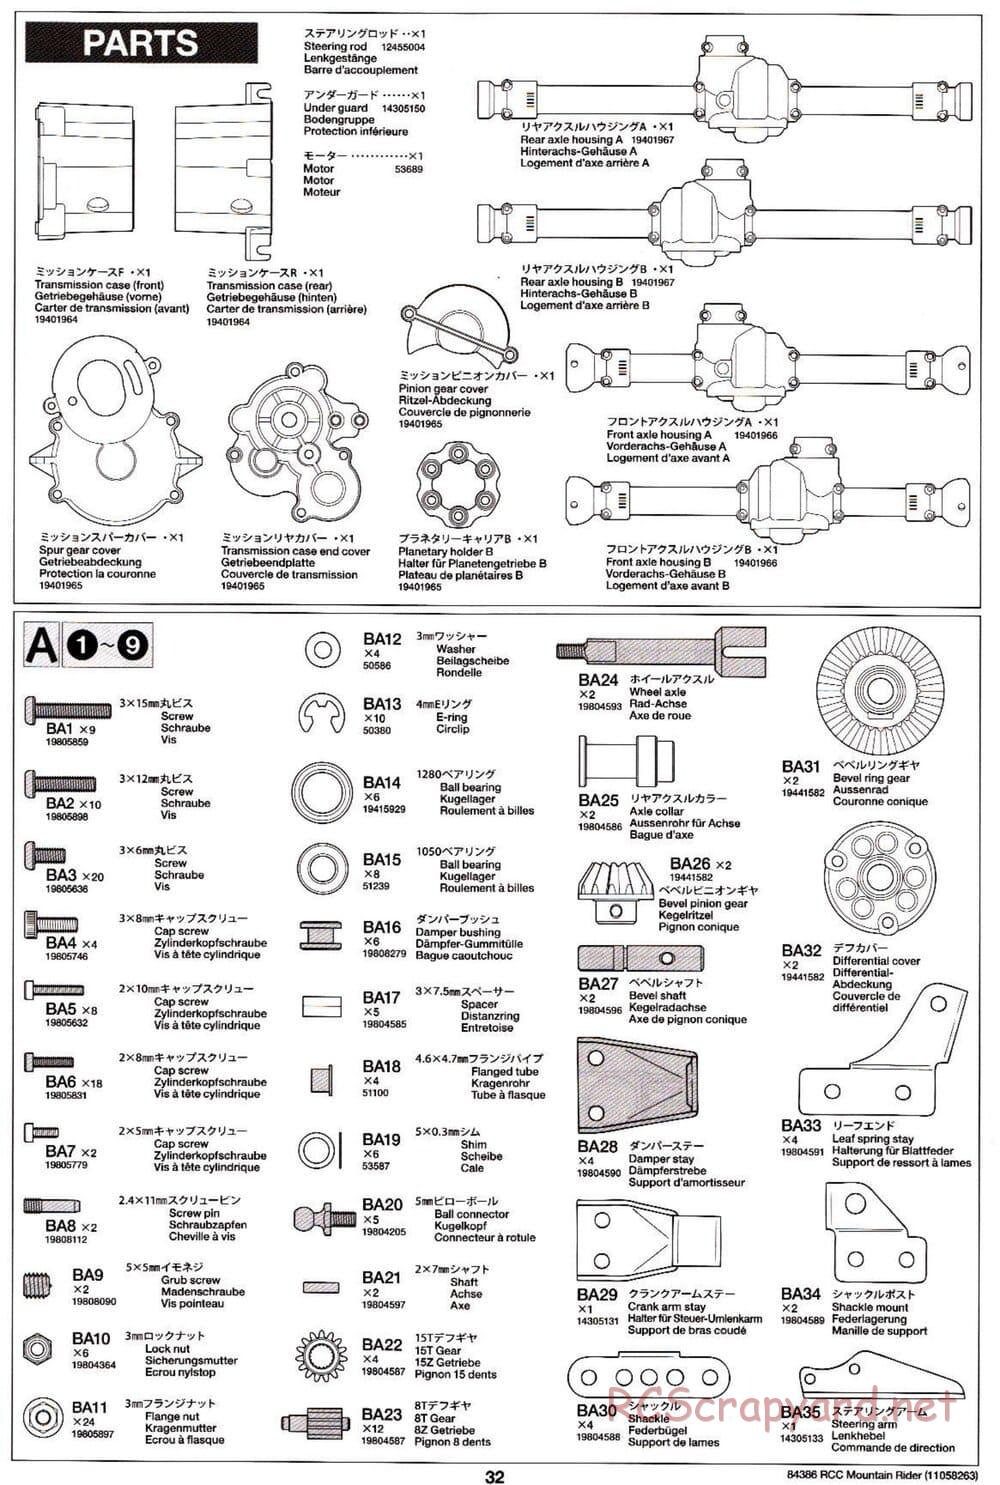 Tamiya - Toyota 4x4 Pick-Up Mountain Rider Chassis - Manual - Page 32